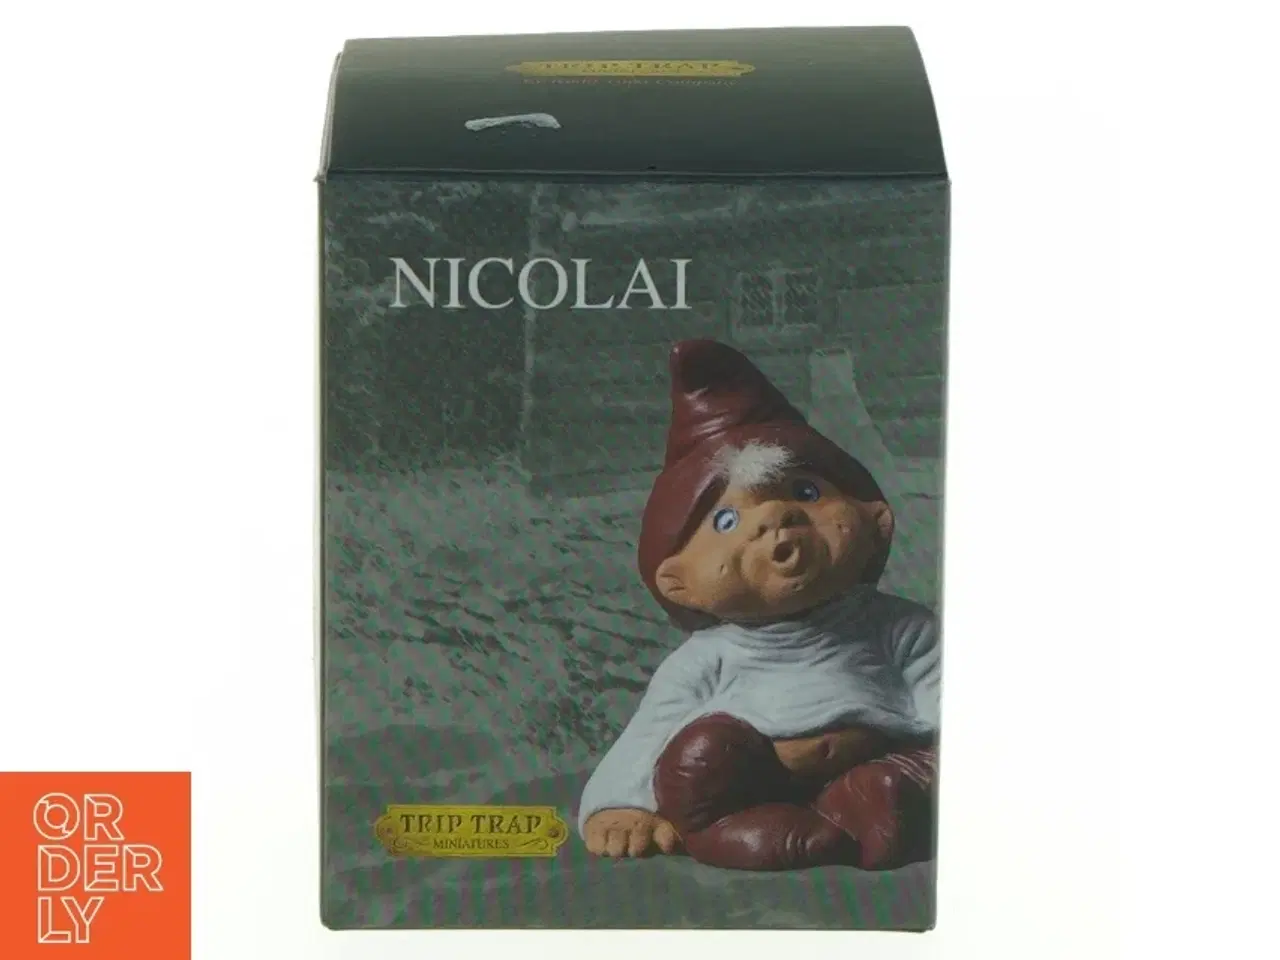 Billede 1 - Nisse figur 'NICOLAI' fra Trip Trap (str. 9 x 7 cm)